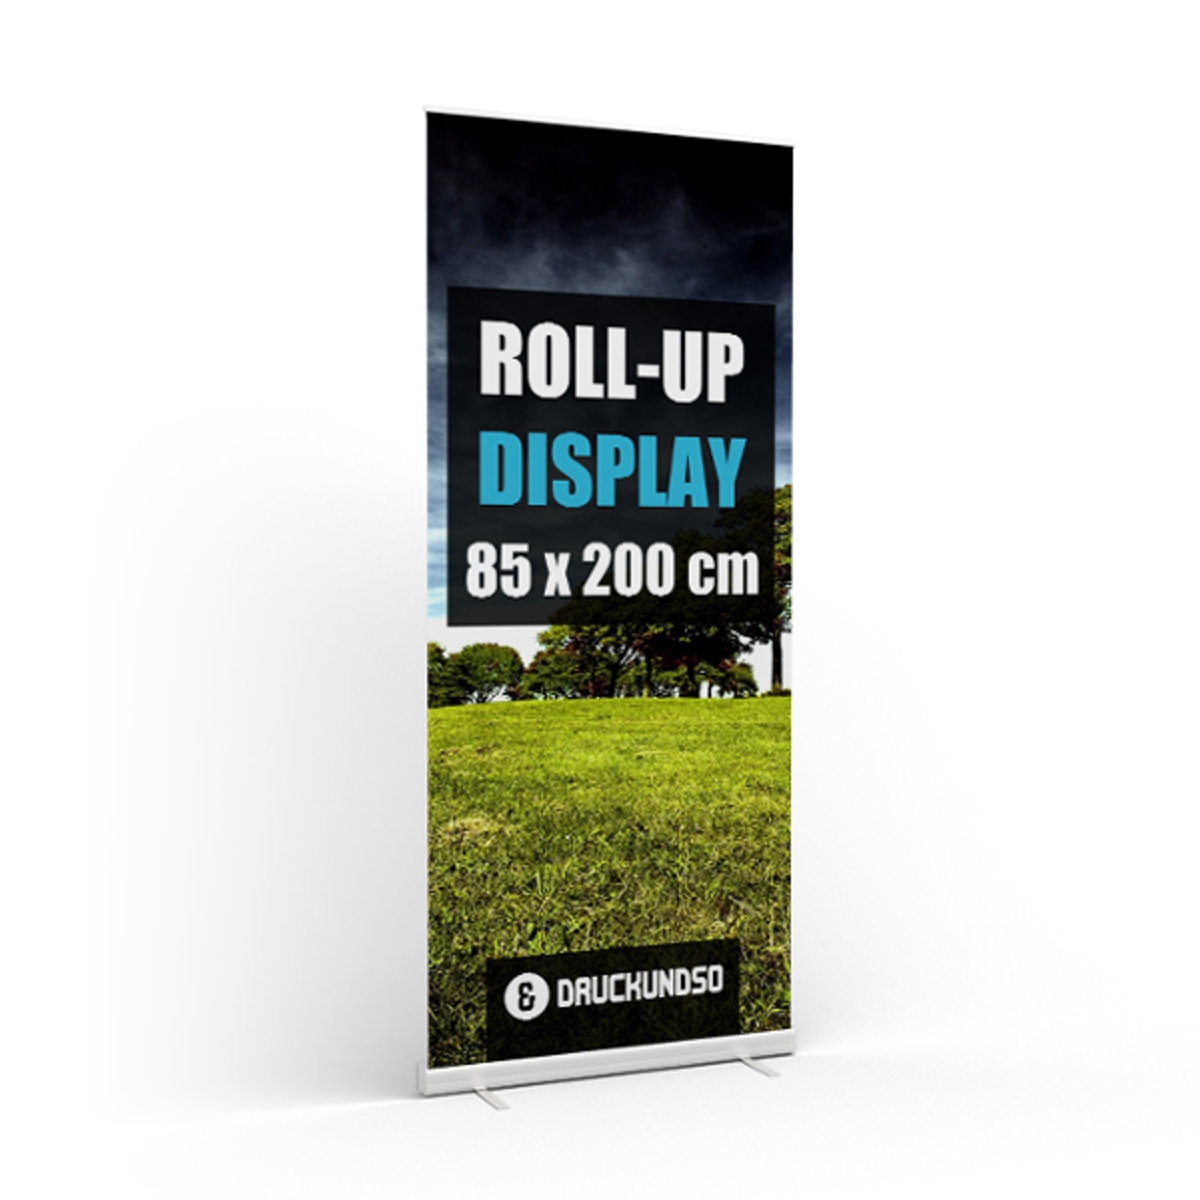 inkl Roll-Up Banner Kundenstopper 85 x 200 Digitaldruck Roll Up Display 